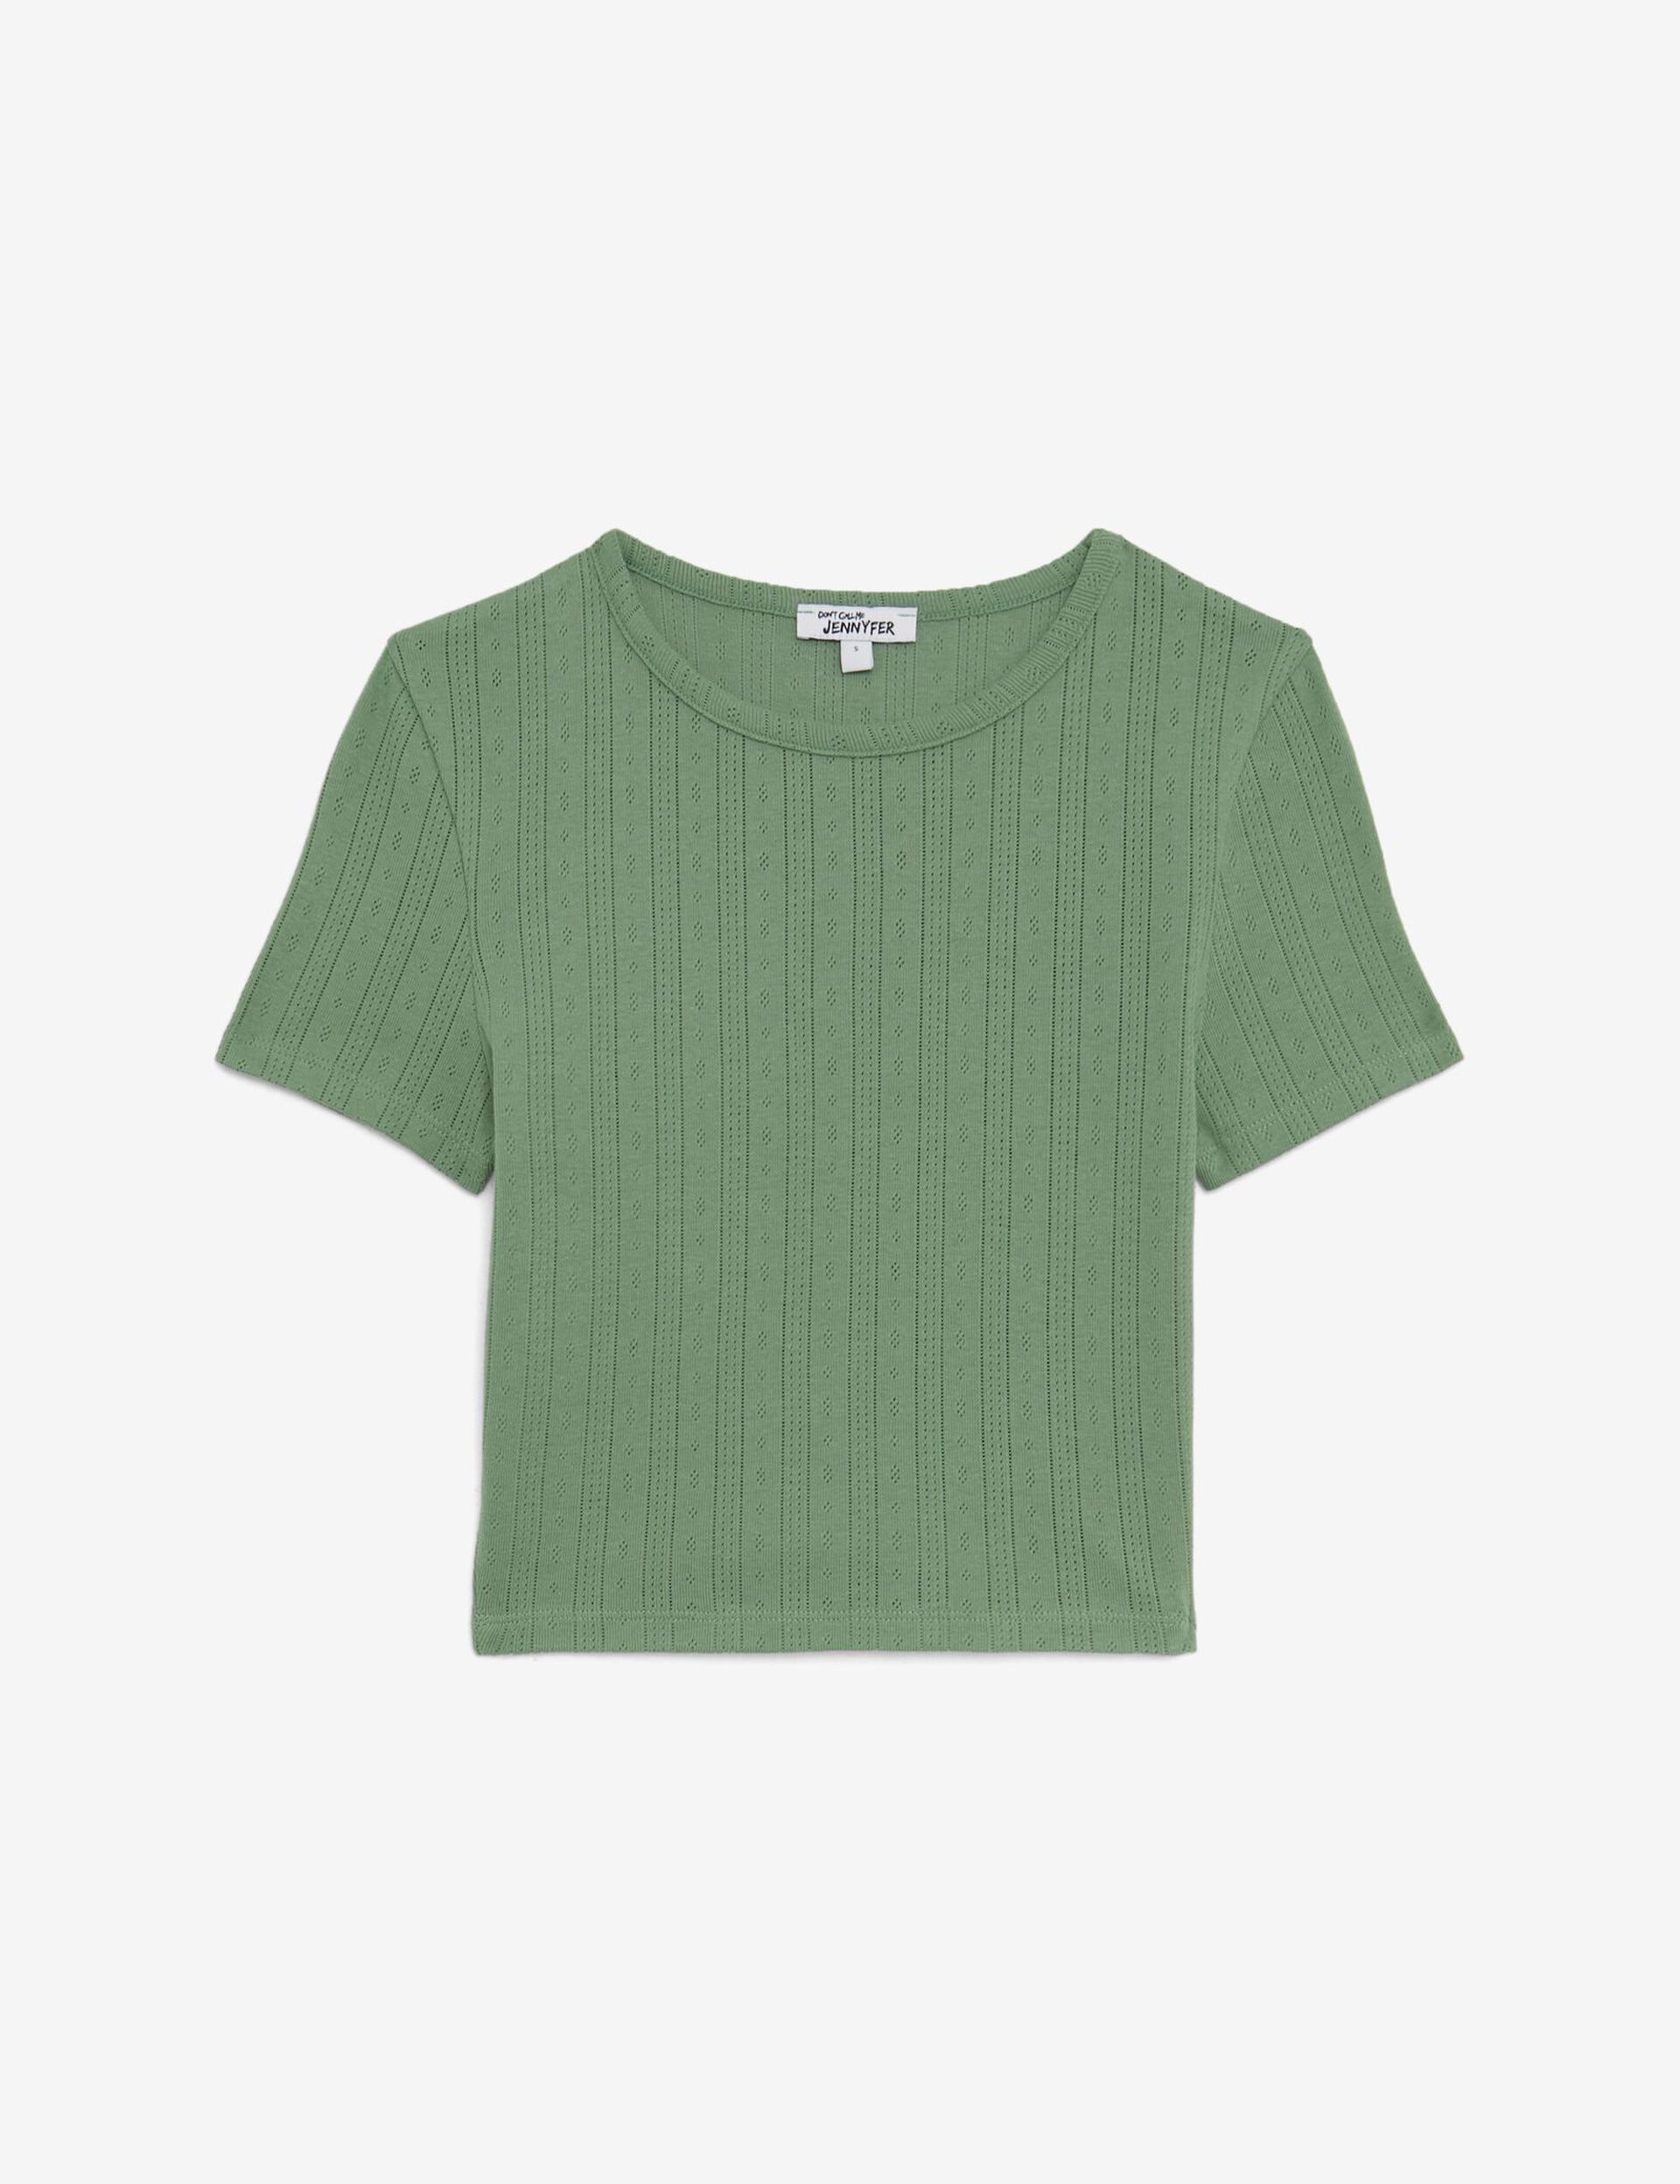 Tee-shirt ajouré vert clair